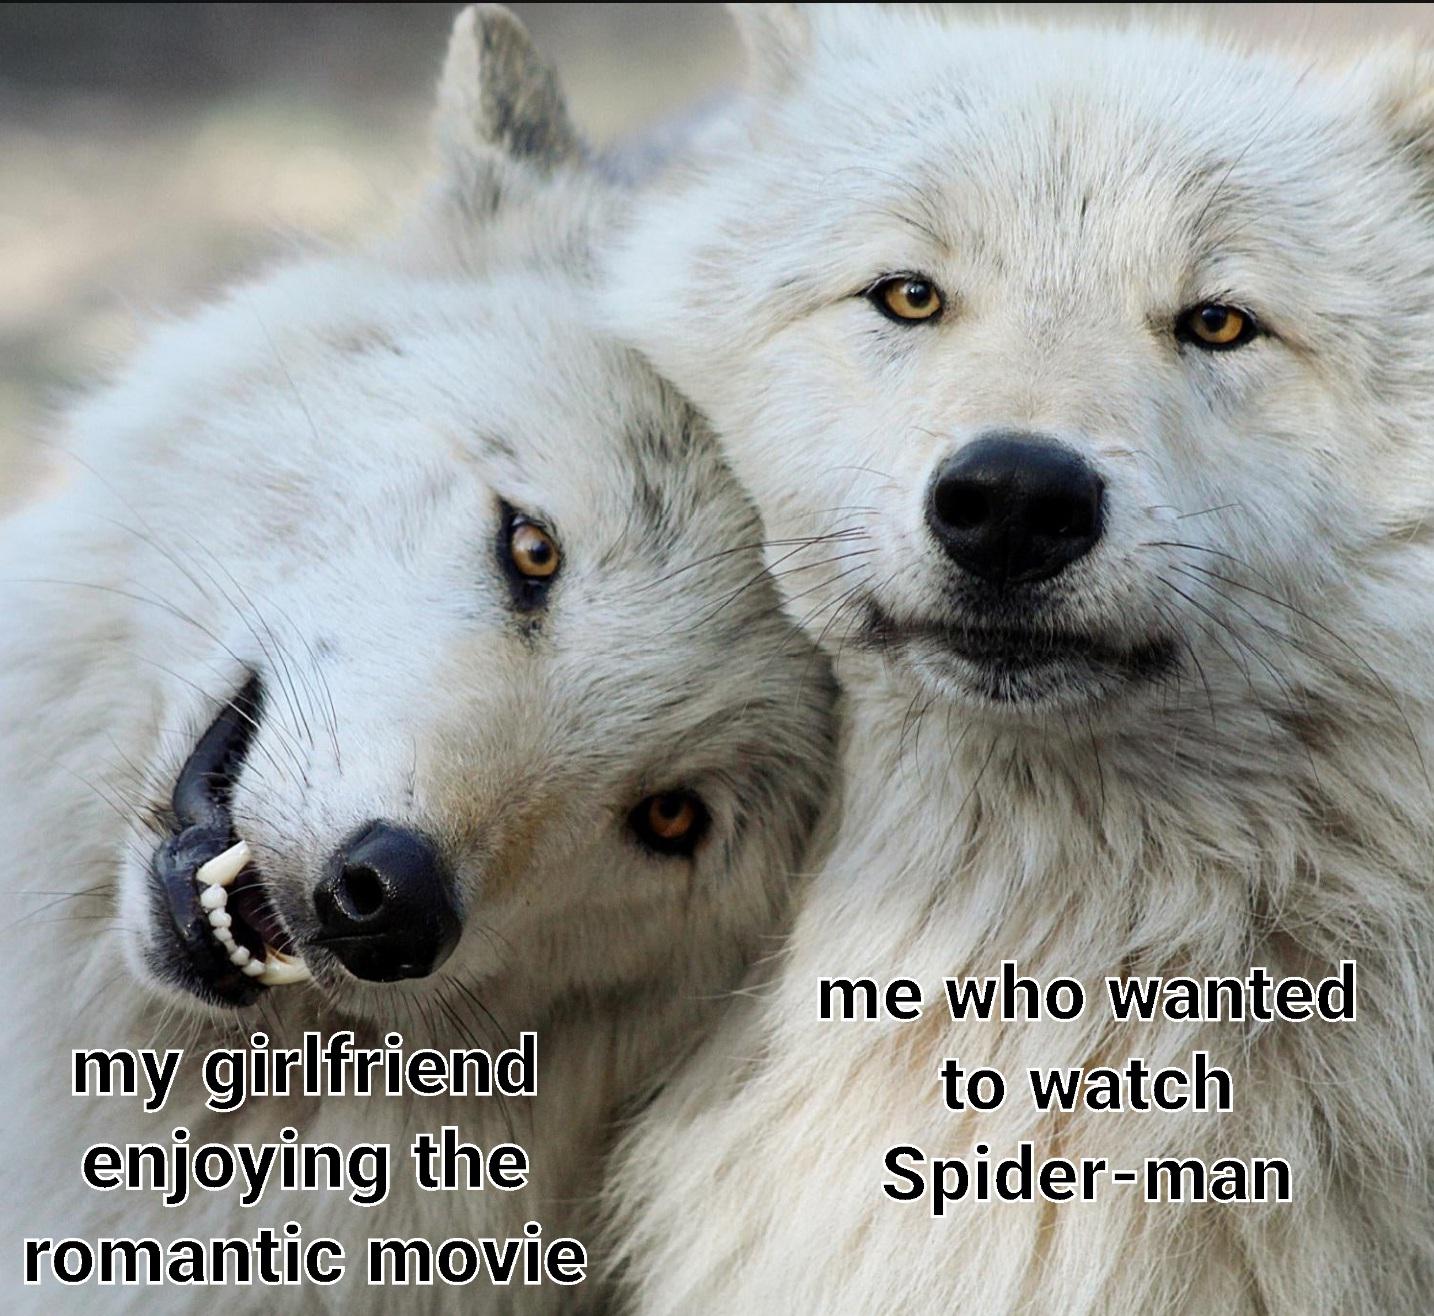 dank memes - fauna - my girlfriend enjoying the romantic movie me who wanted to watch Spiderman